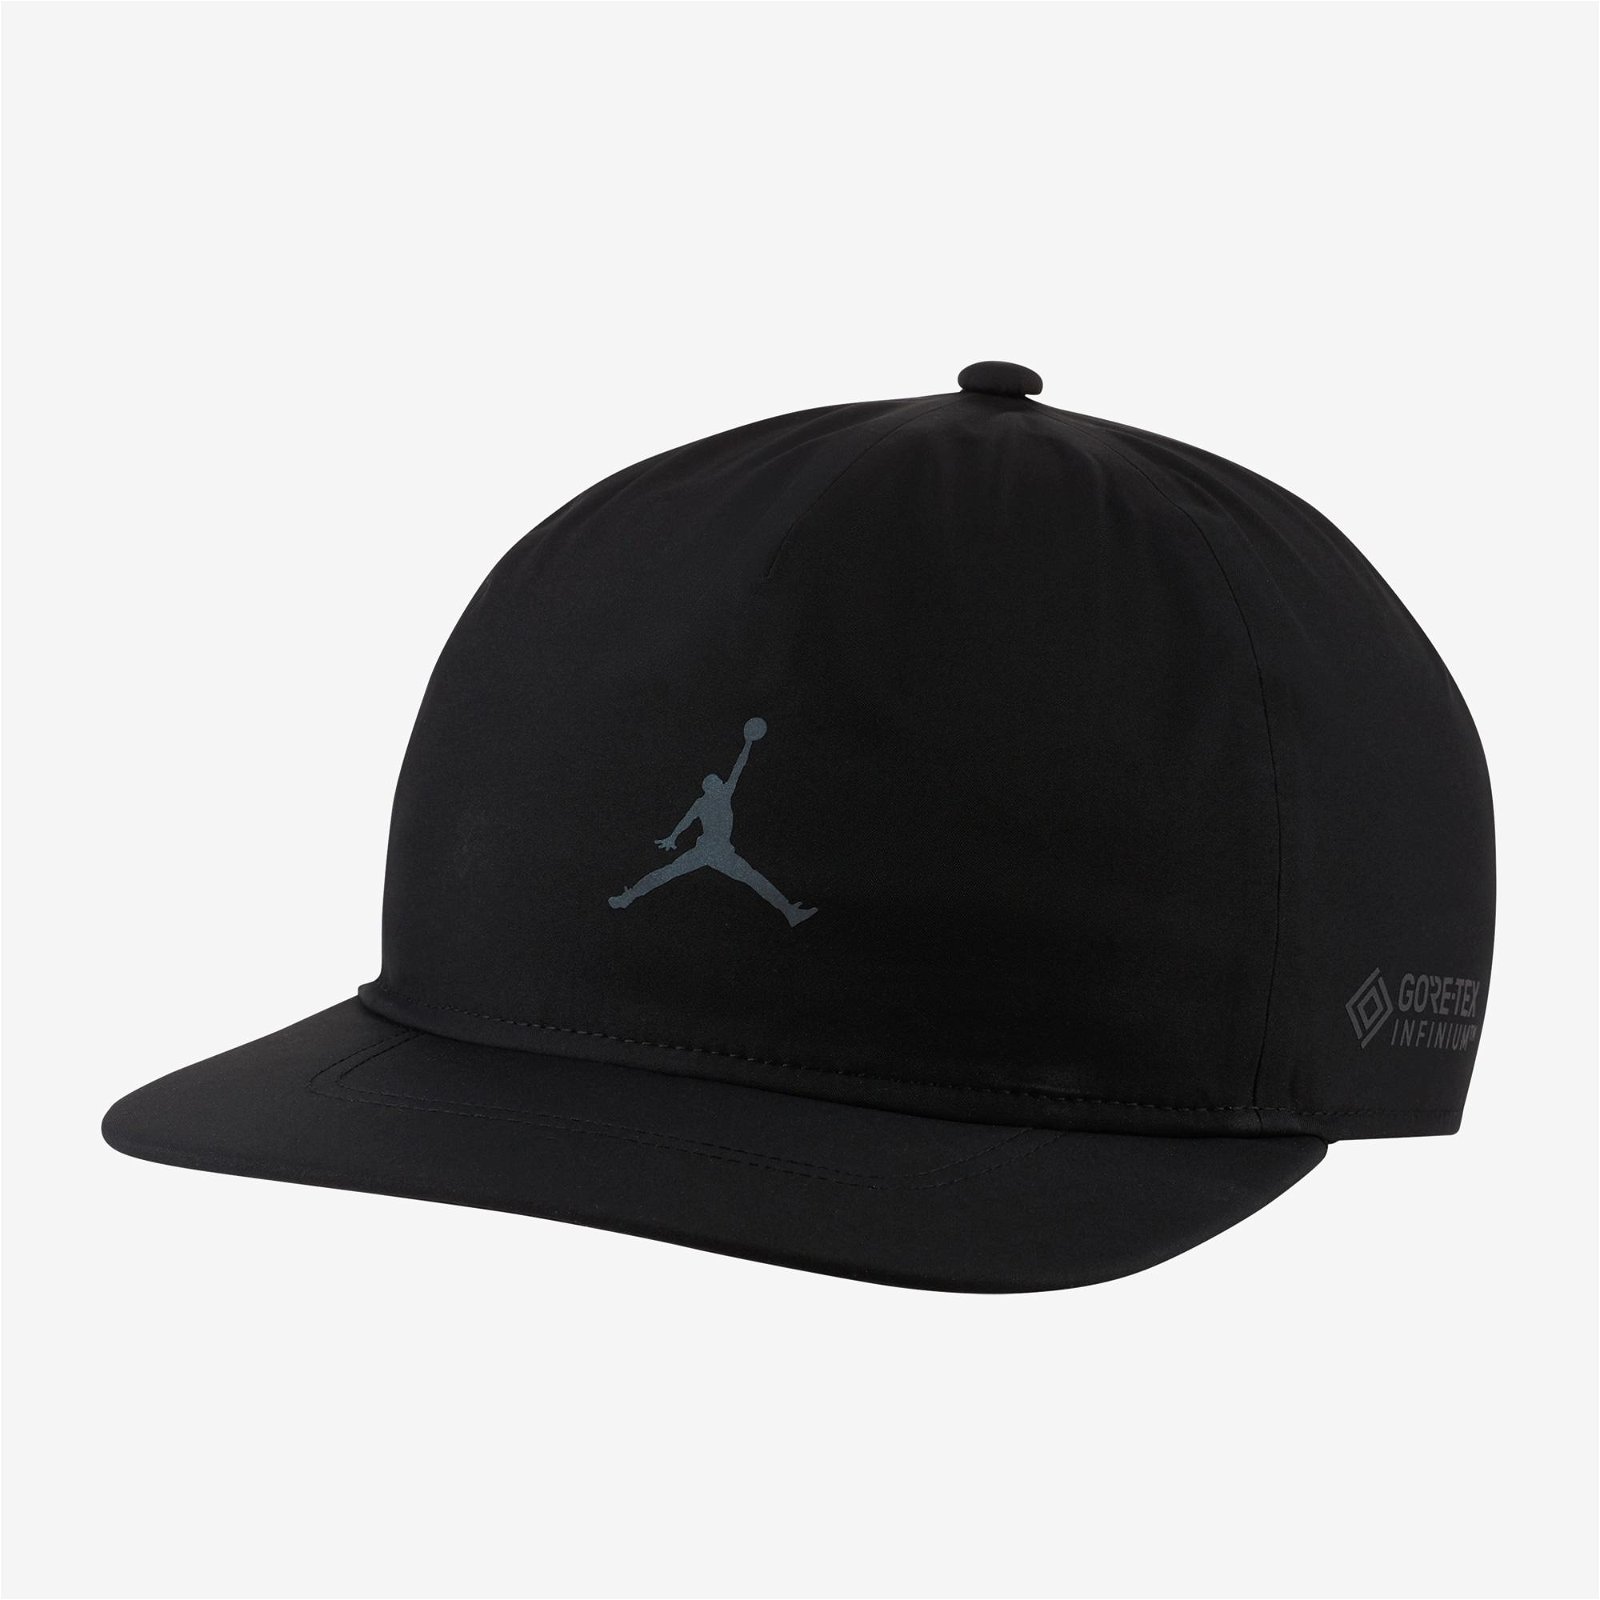 Jordan Jordan Jdi Jm Tech Woven Cap Unisex Siyah Şapka